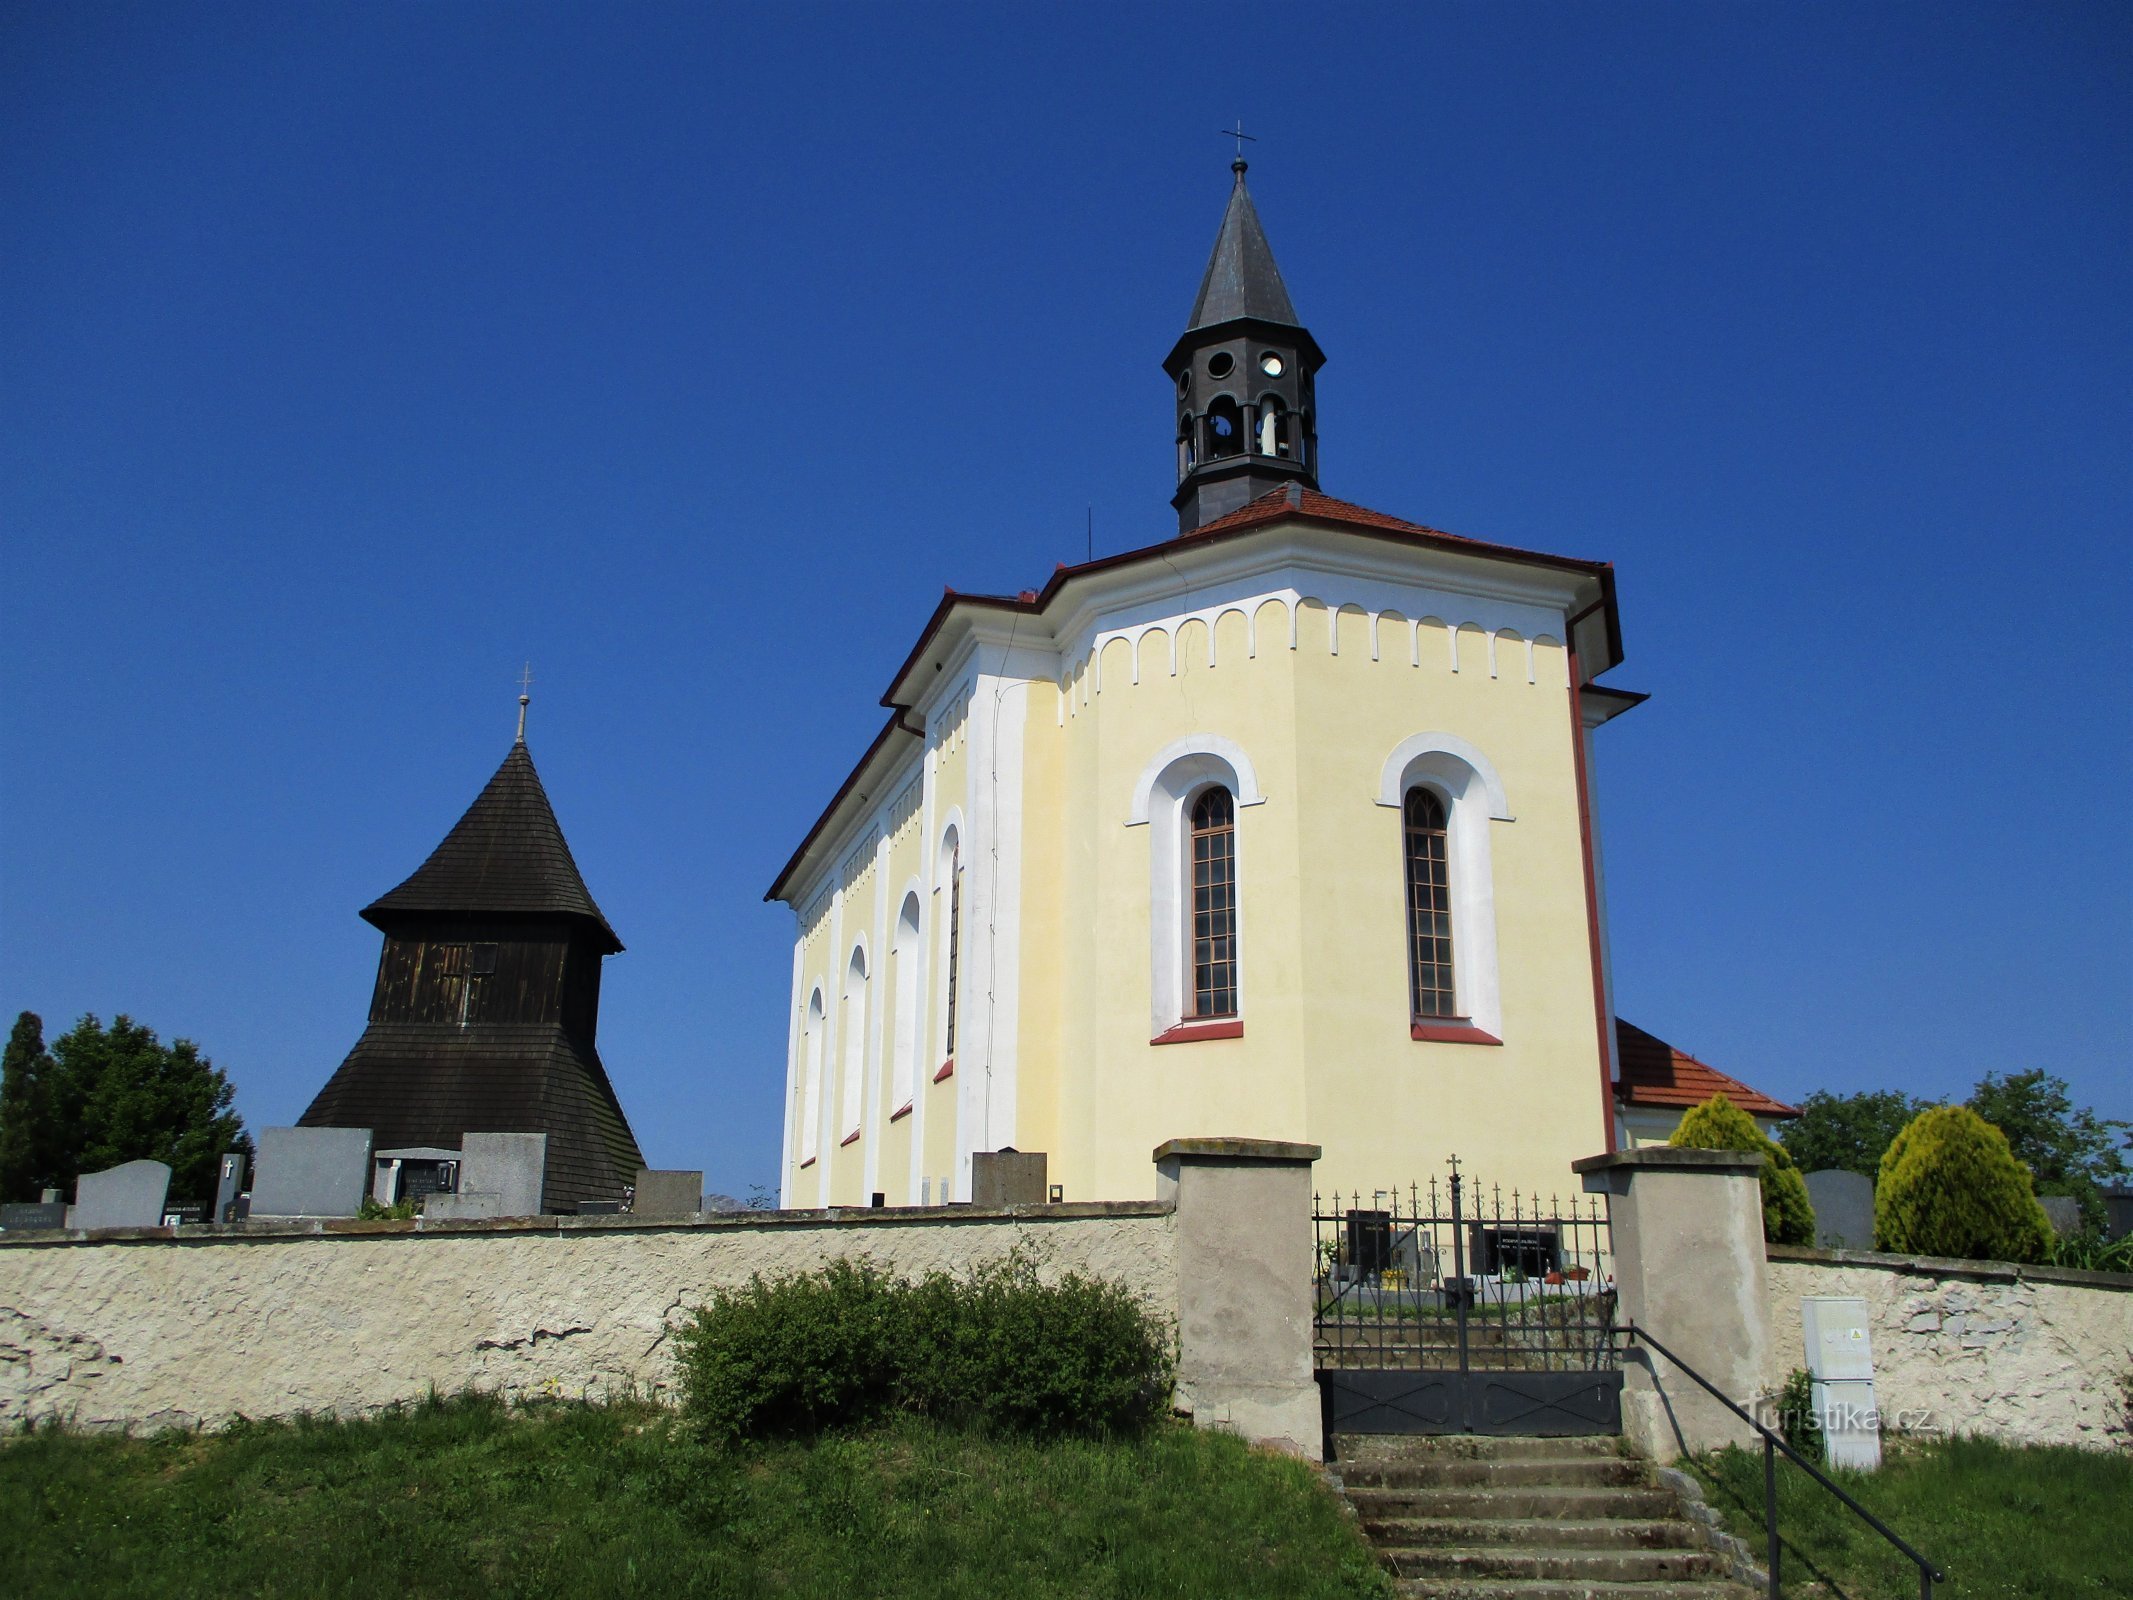 Chiesa di S. Venceslao con il campanile (Horní Ředice, 16.5.2020/XNUMX/XNUMX)